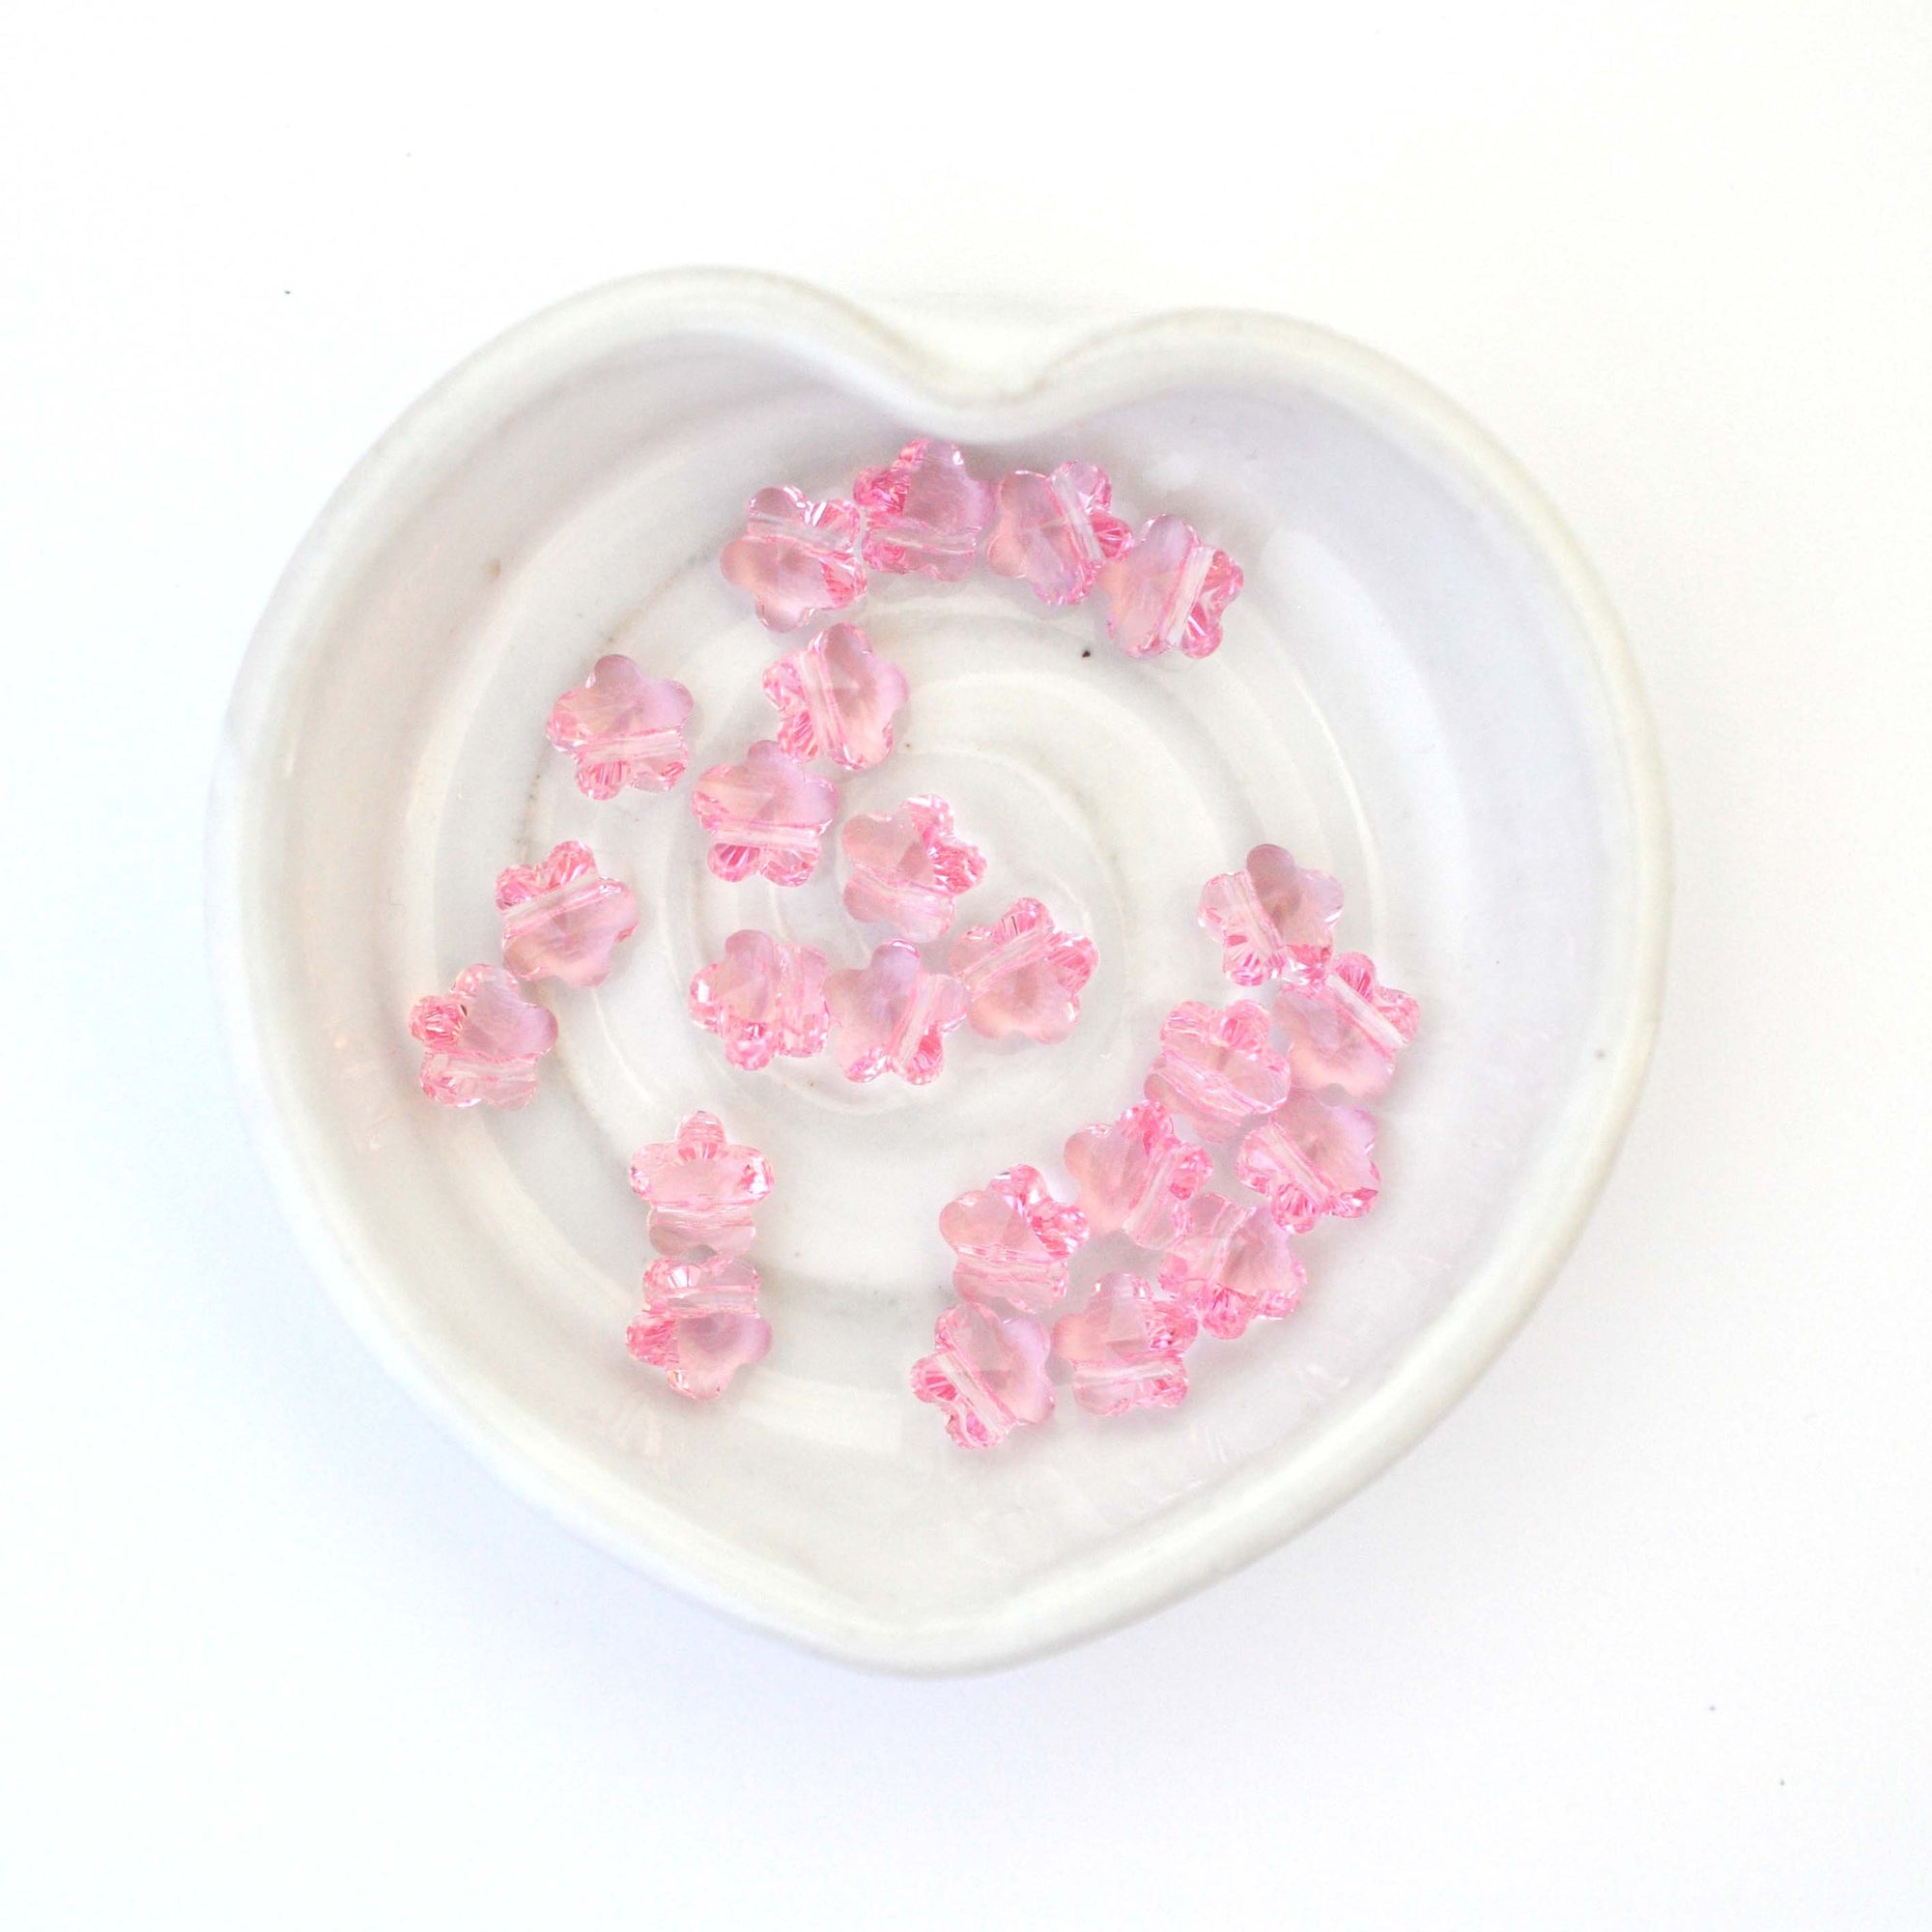 Light Rose Flower Beads 5744 Barton Crystal 8mm